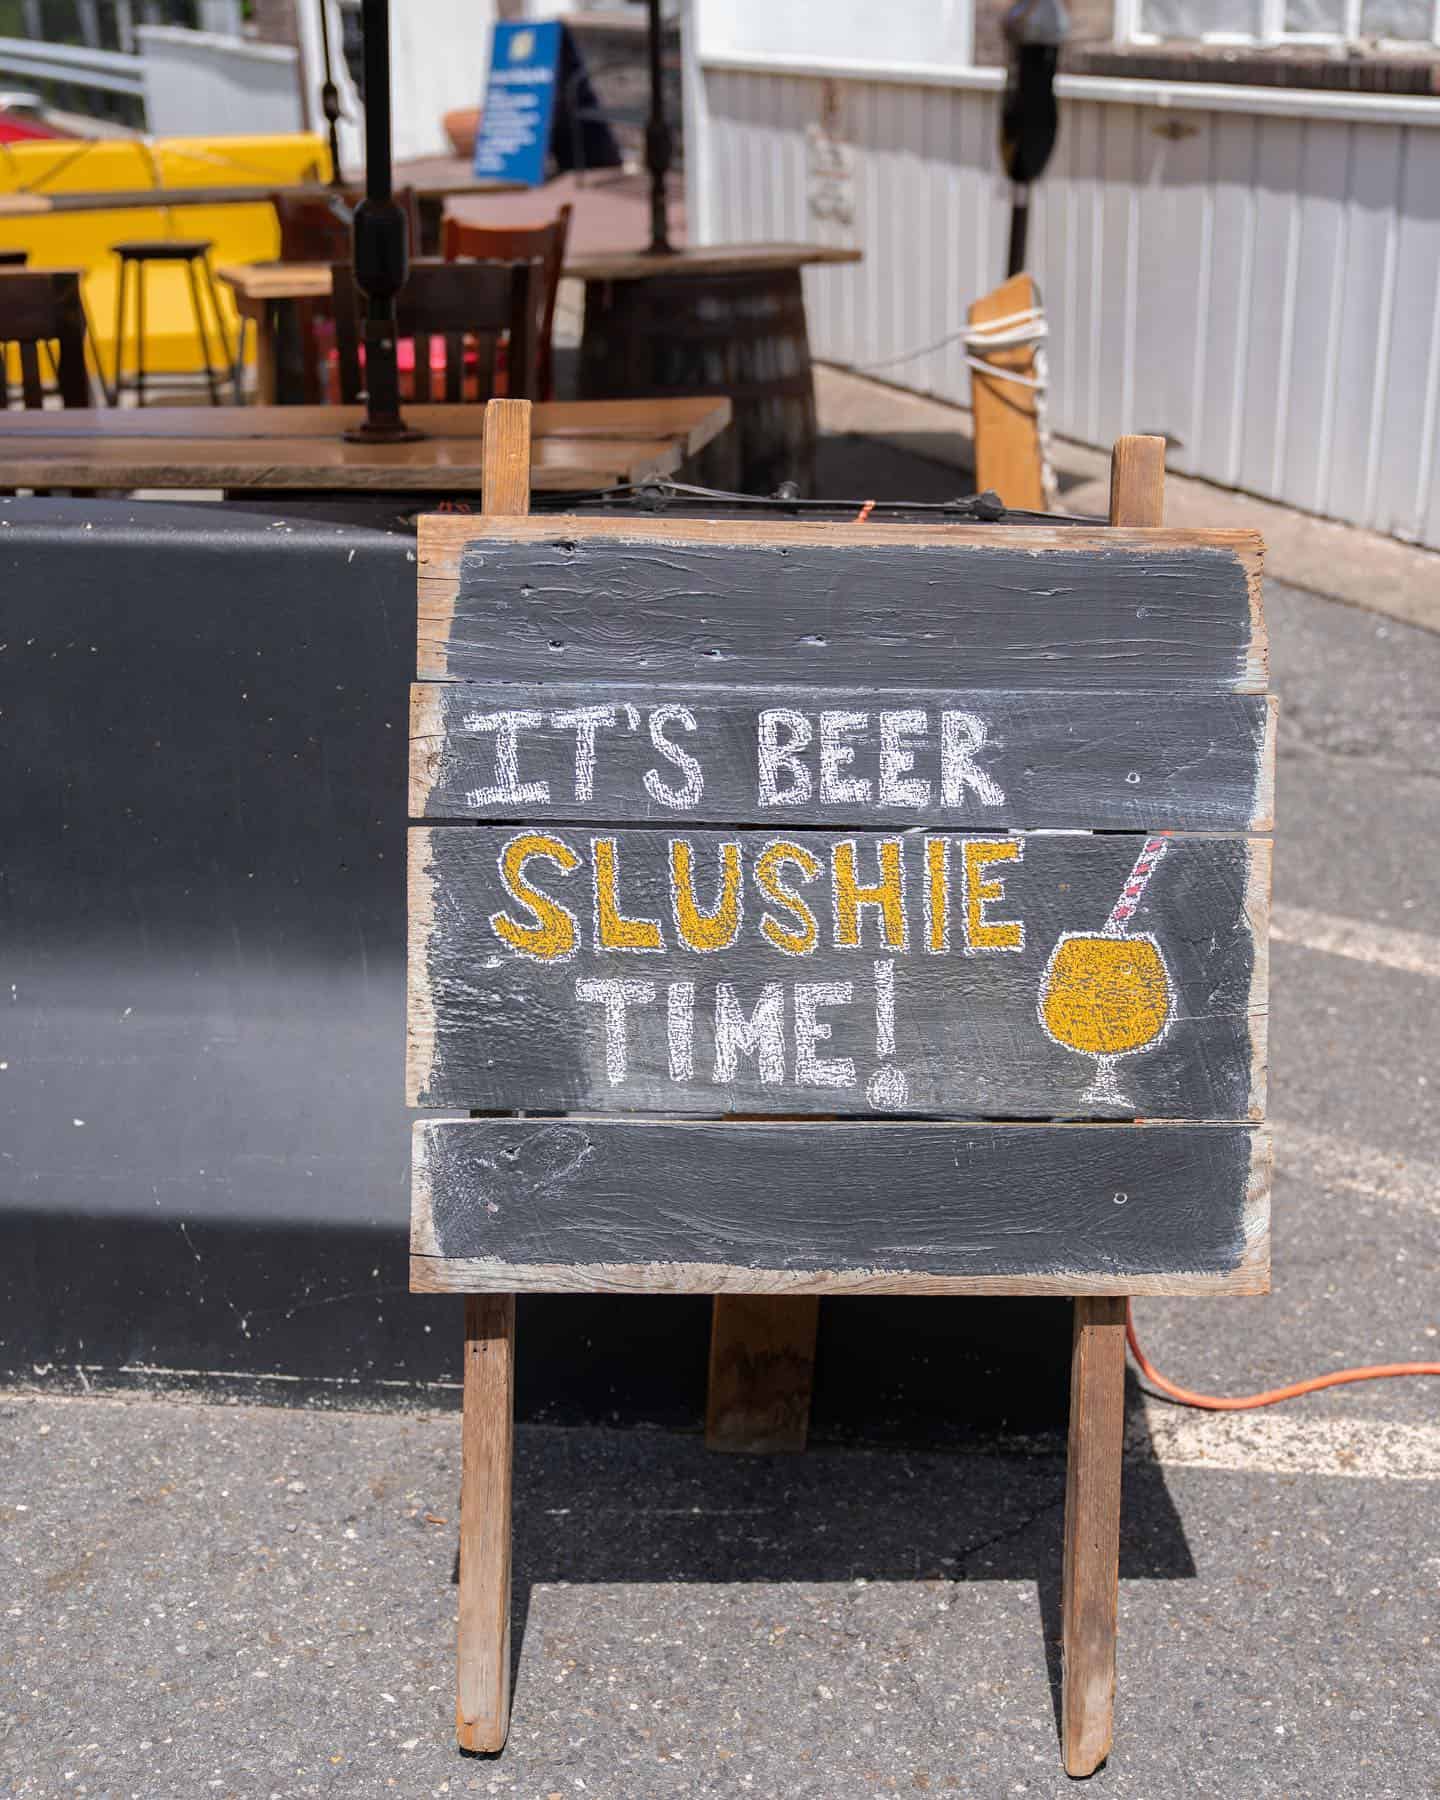 Hermit Thrush Brewery - Beer Slushie Time Sign